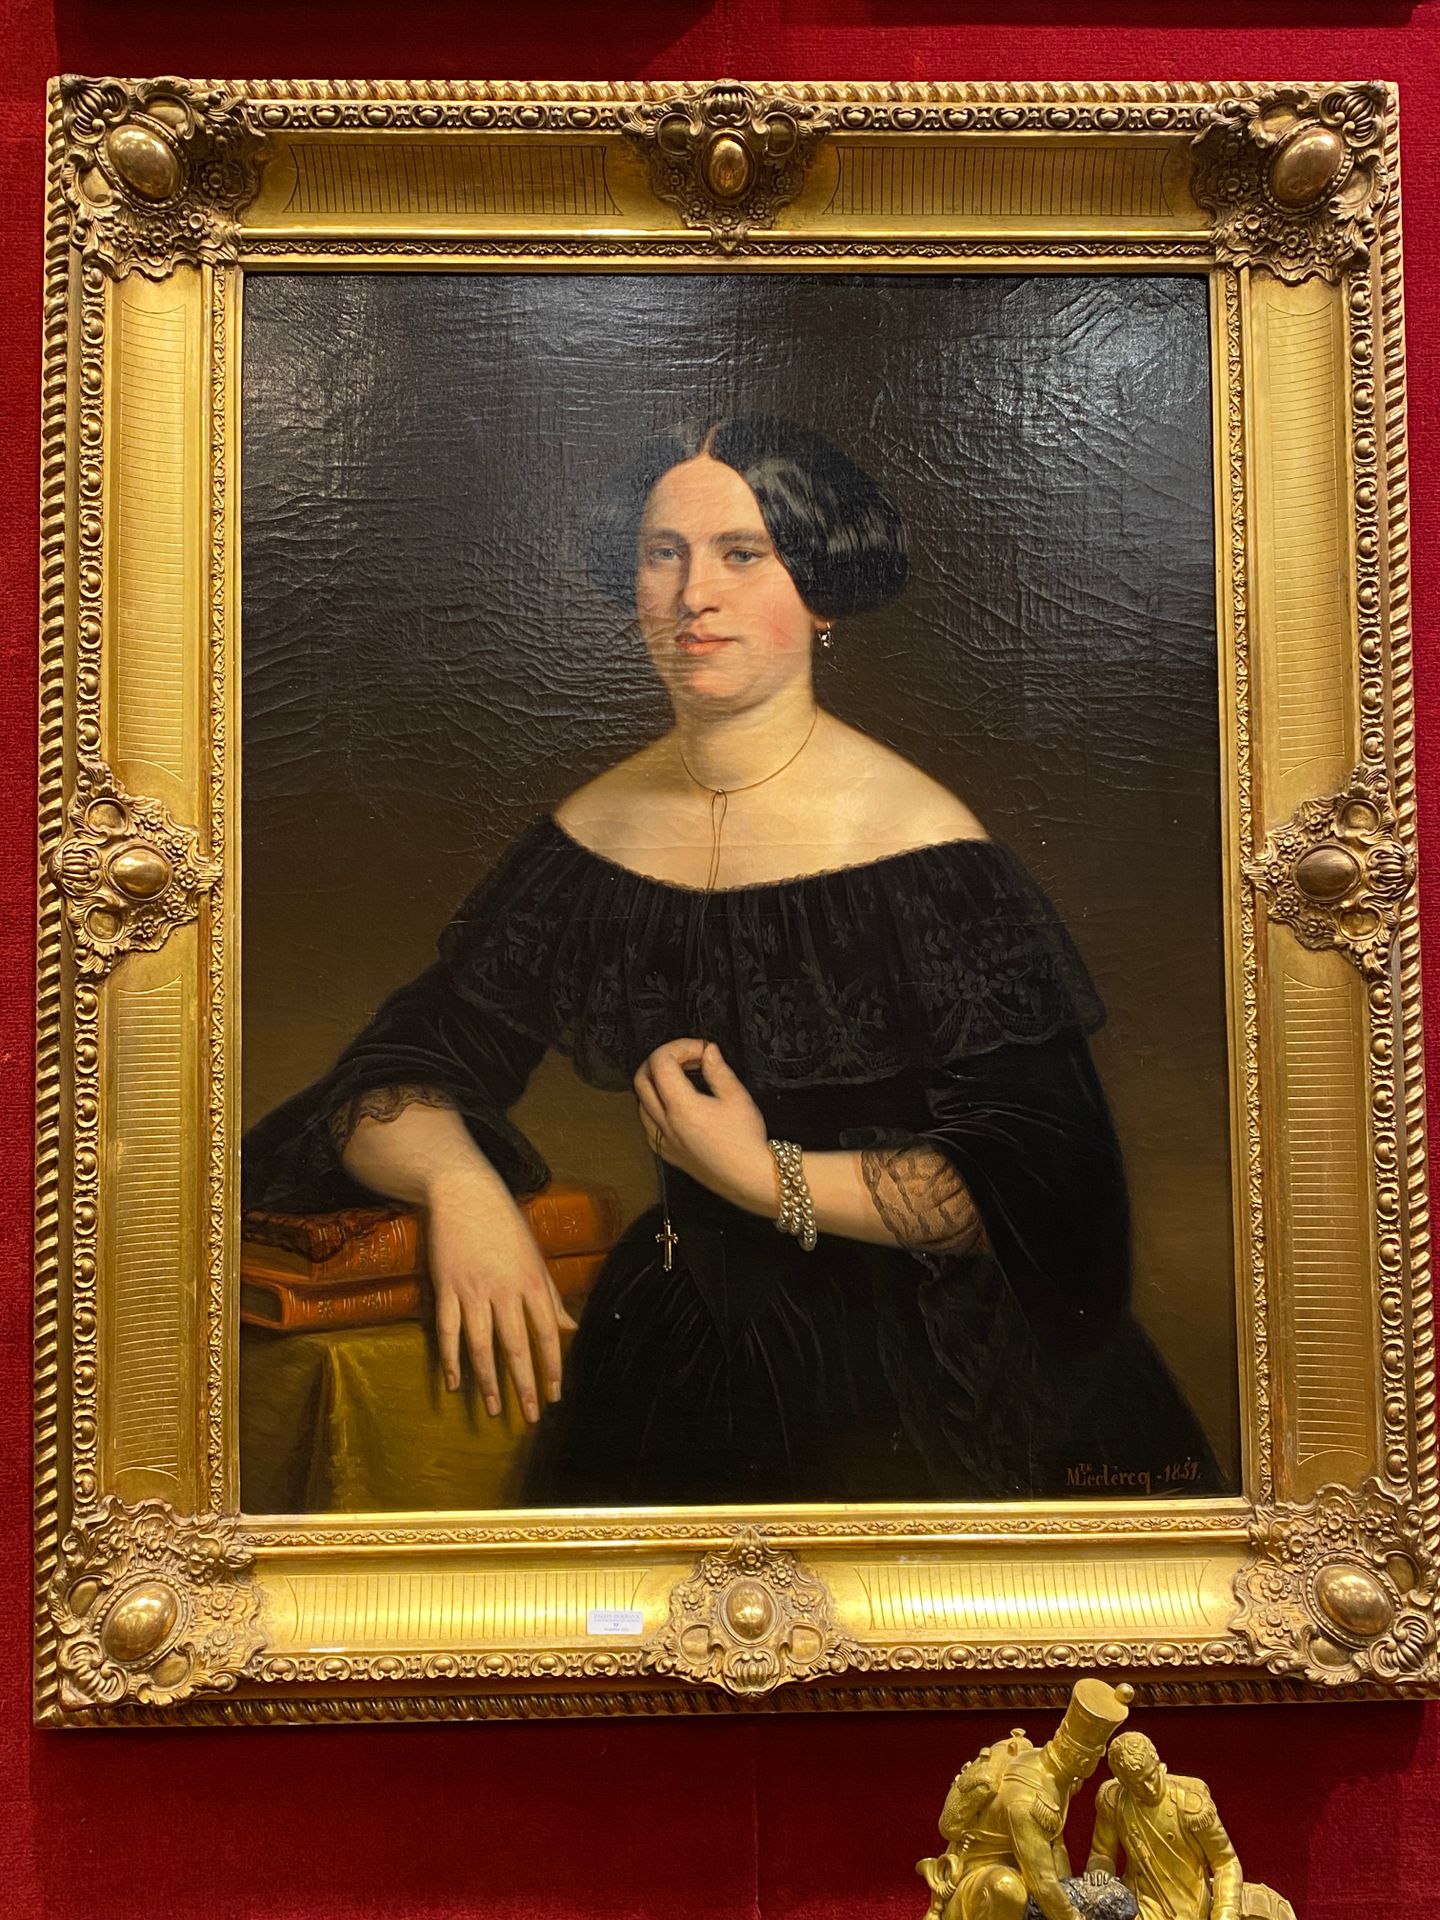 Null *Margaret LECLERCQ

(活跃于1851年)

穿着黑色衣服的年轻女子的肖像

在其原来的画布上

90 x 72.5厘米

右下方有&hellip;